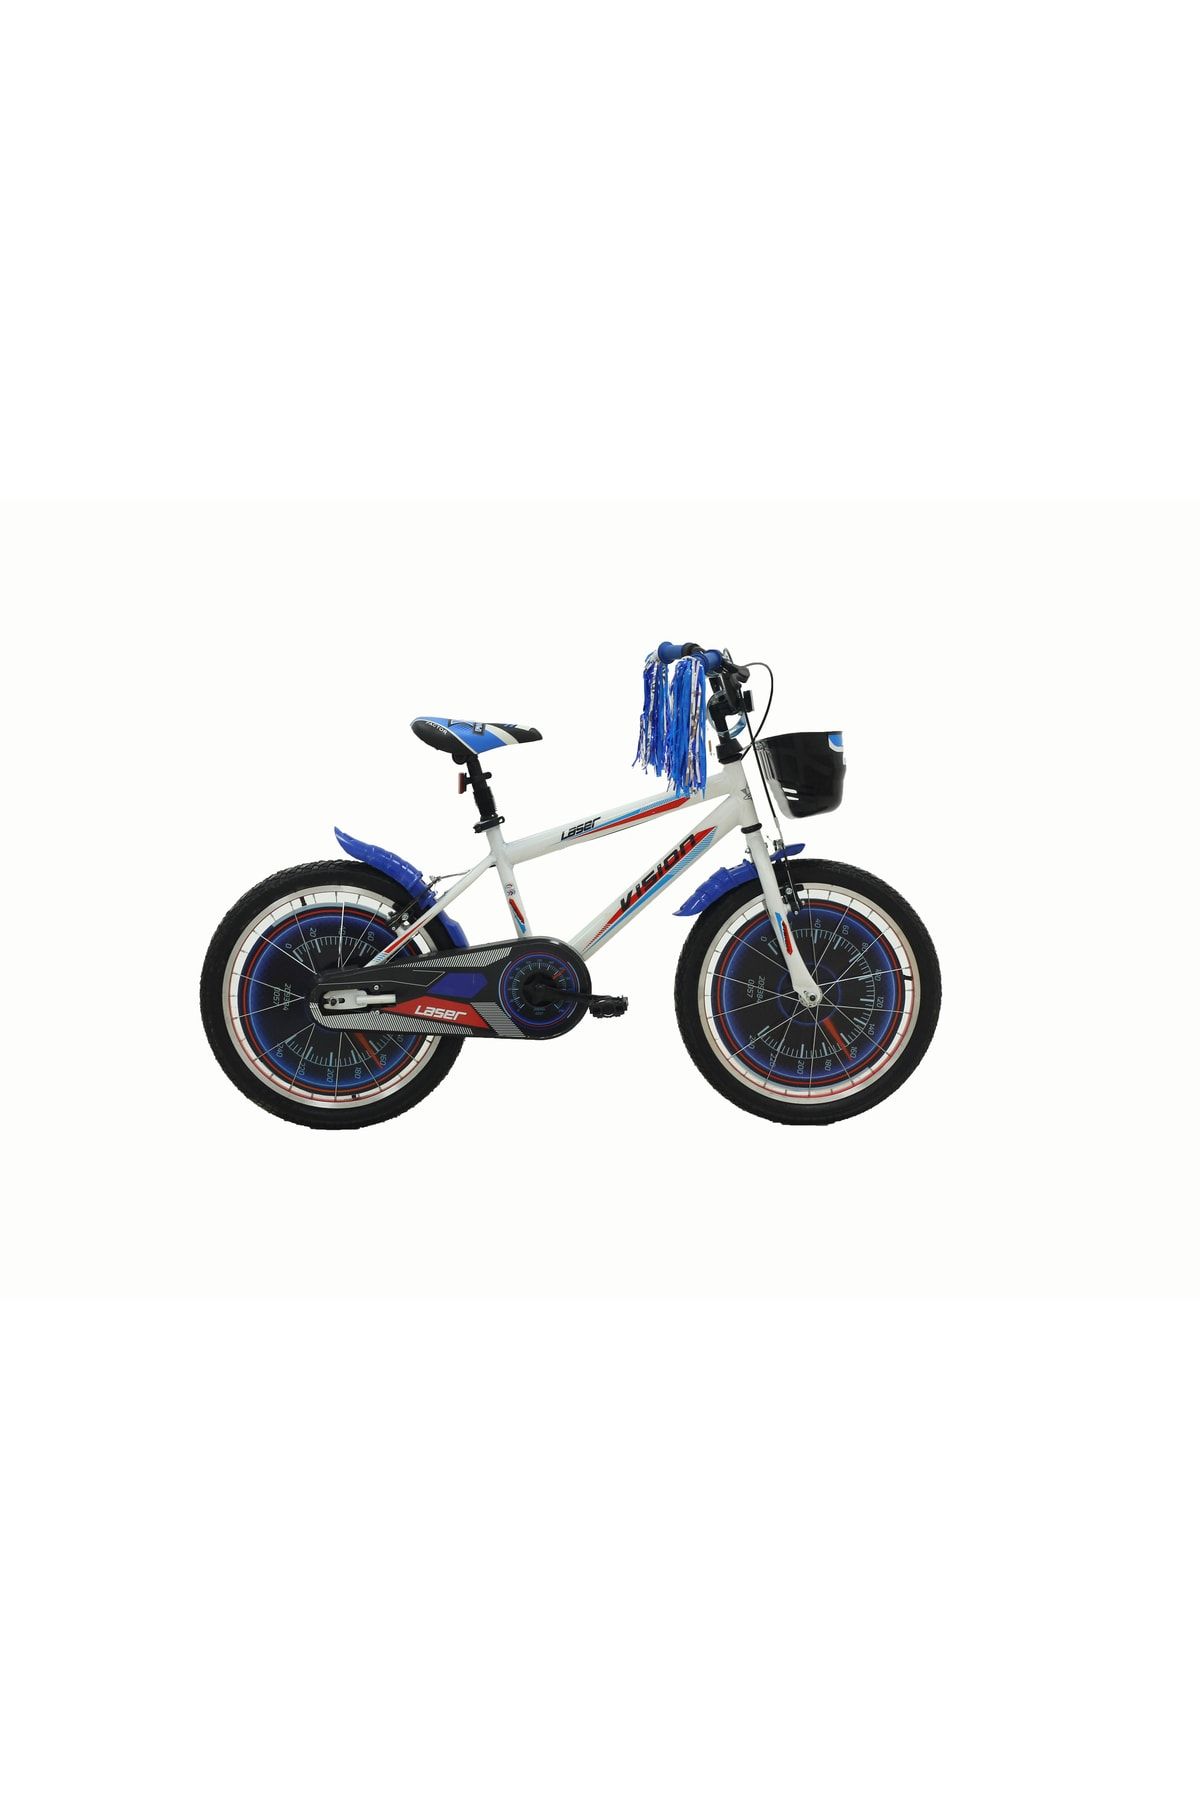 Vision Belderia Laser 20" Jant Vitessiz V-fren Beyaz-mavi Çocuk Bisikleti